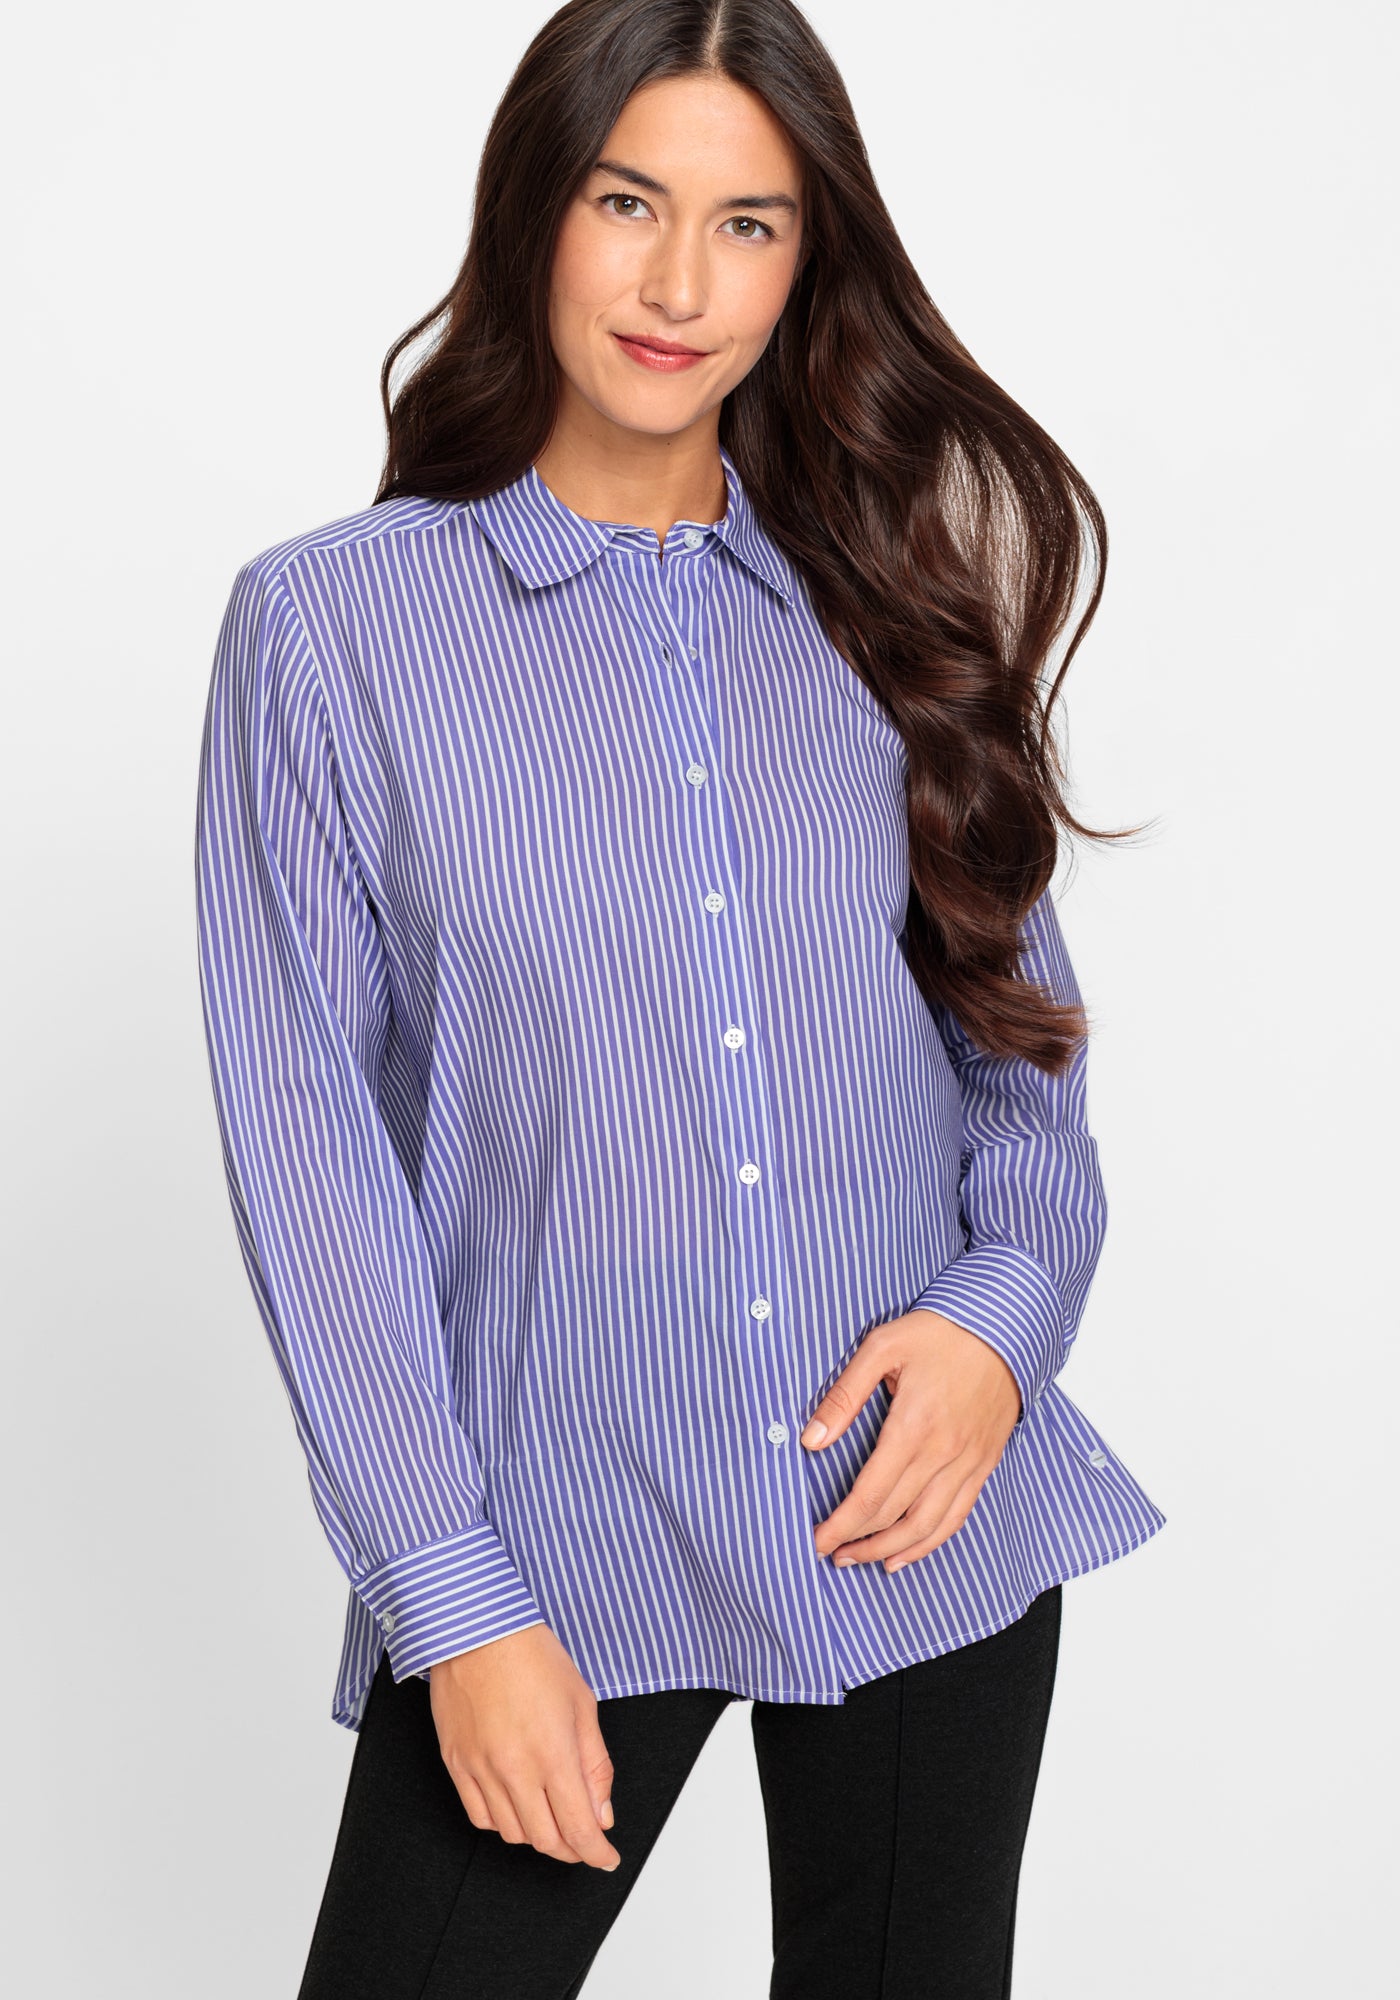 Olsen - Purple with White Pin Striped Shirt